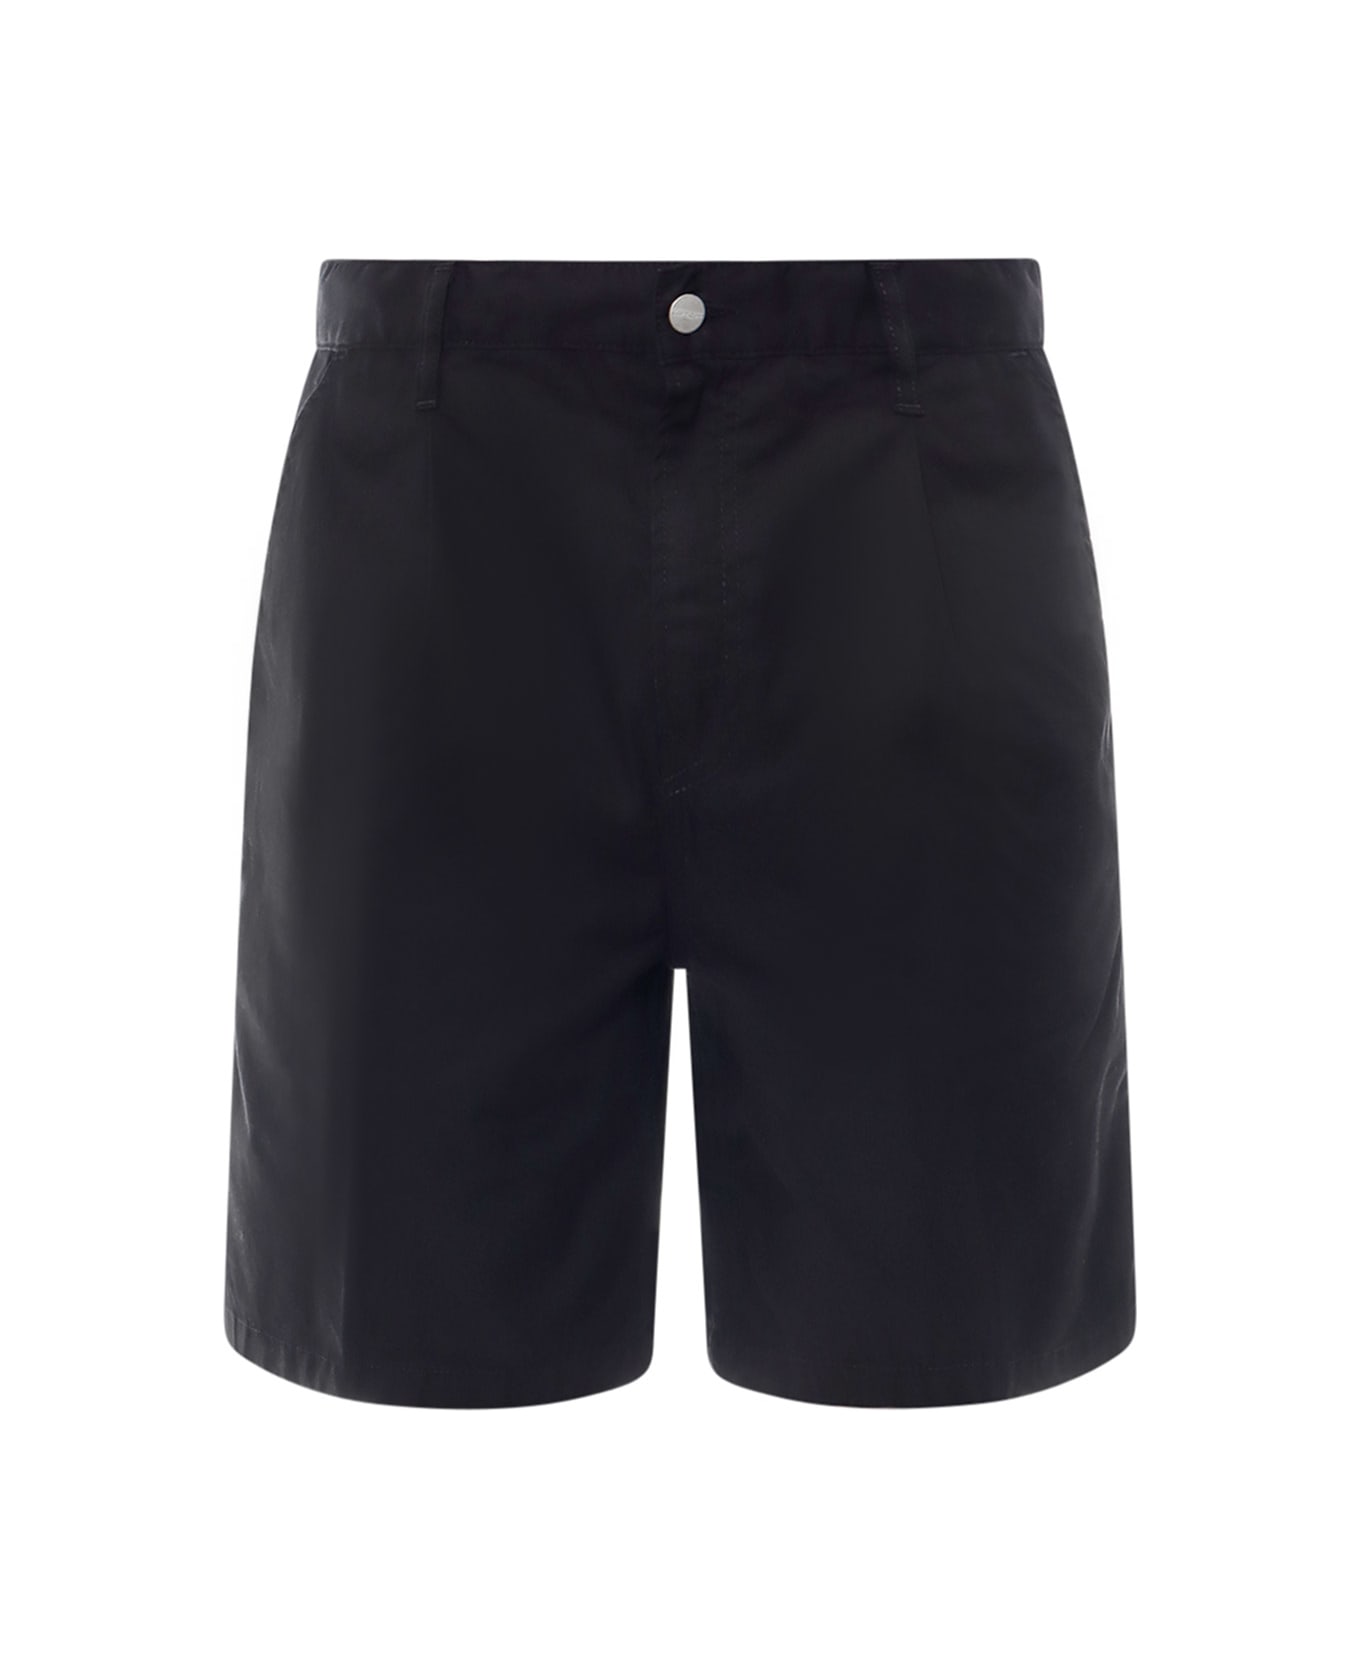 Carhartt Bermuda Shorts - Black